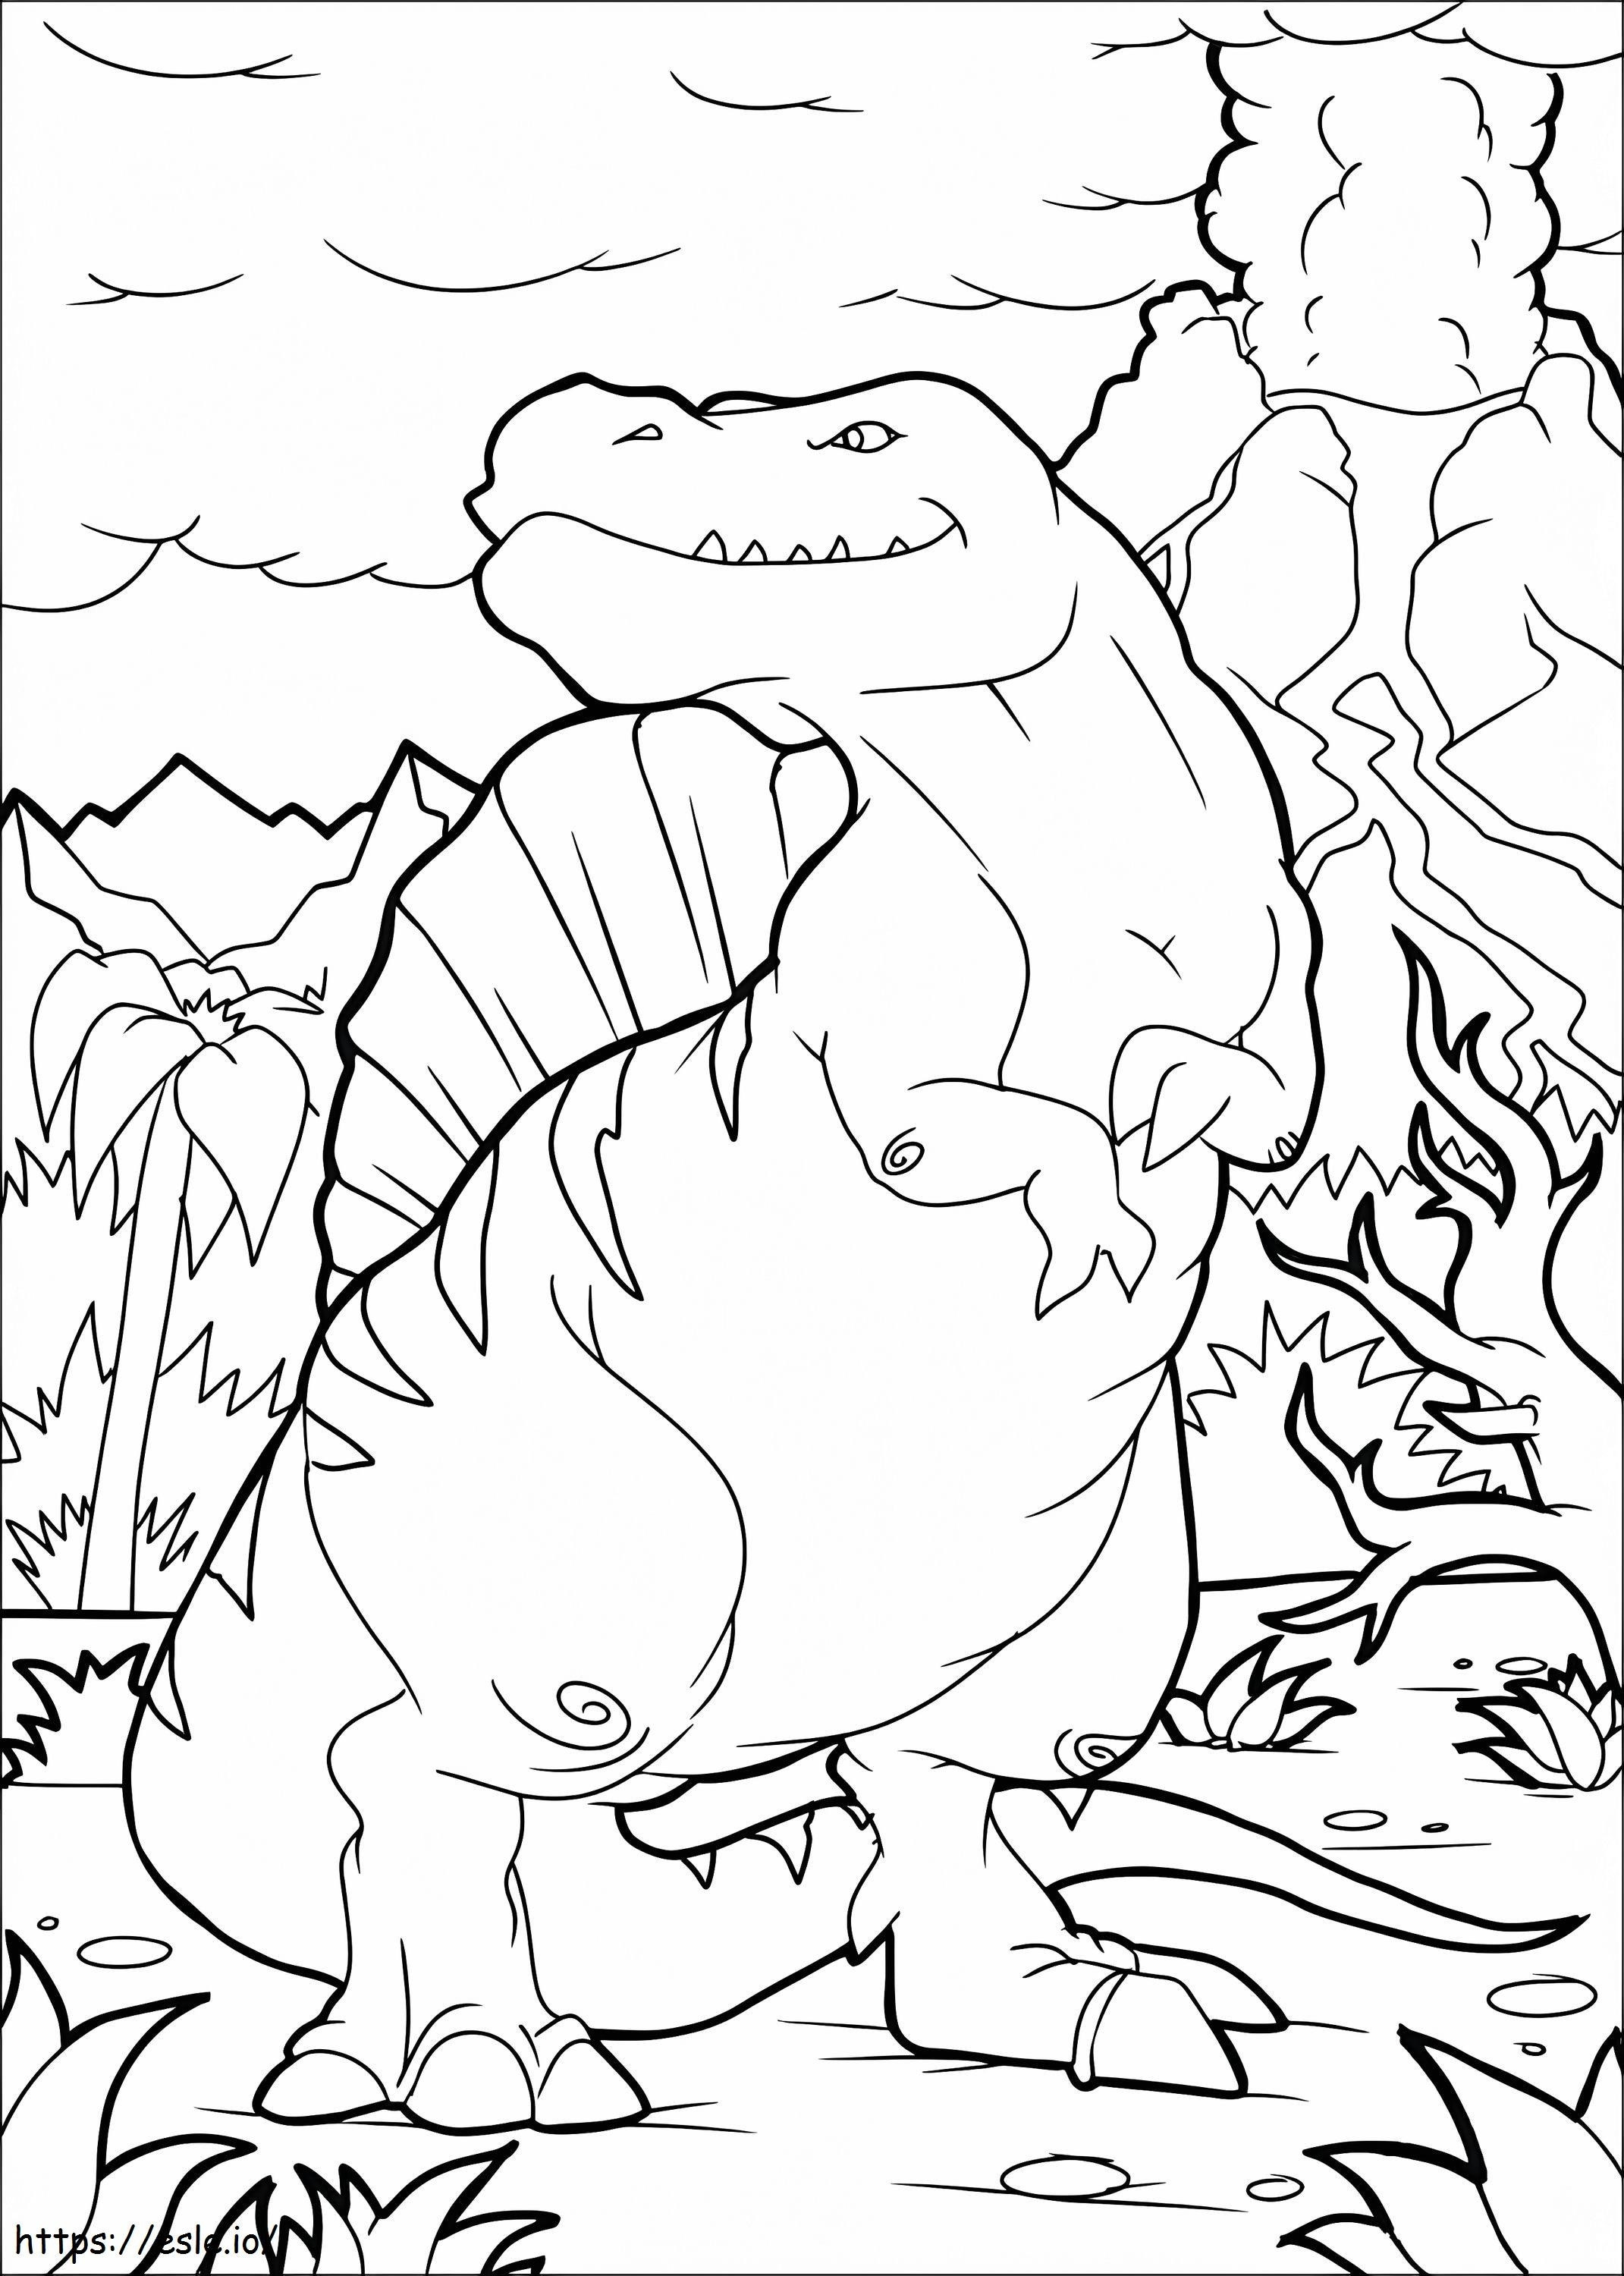 Printable Spinosaurus coloring page